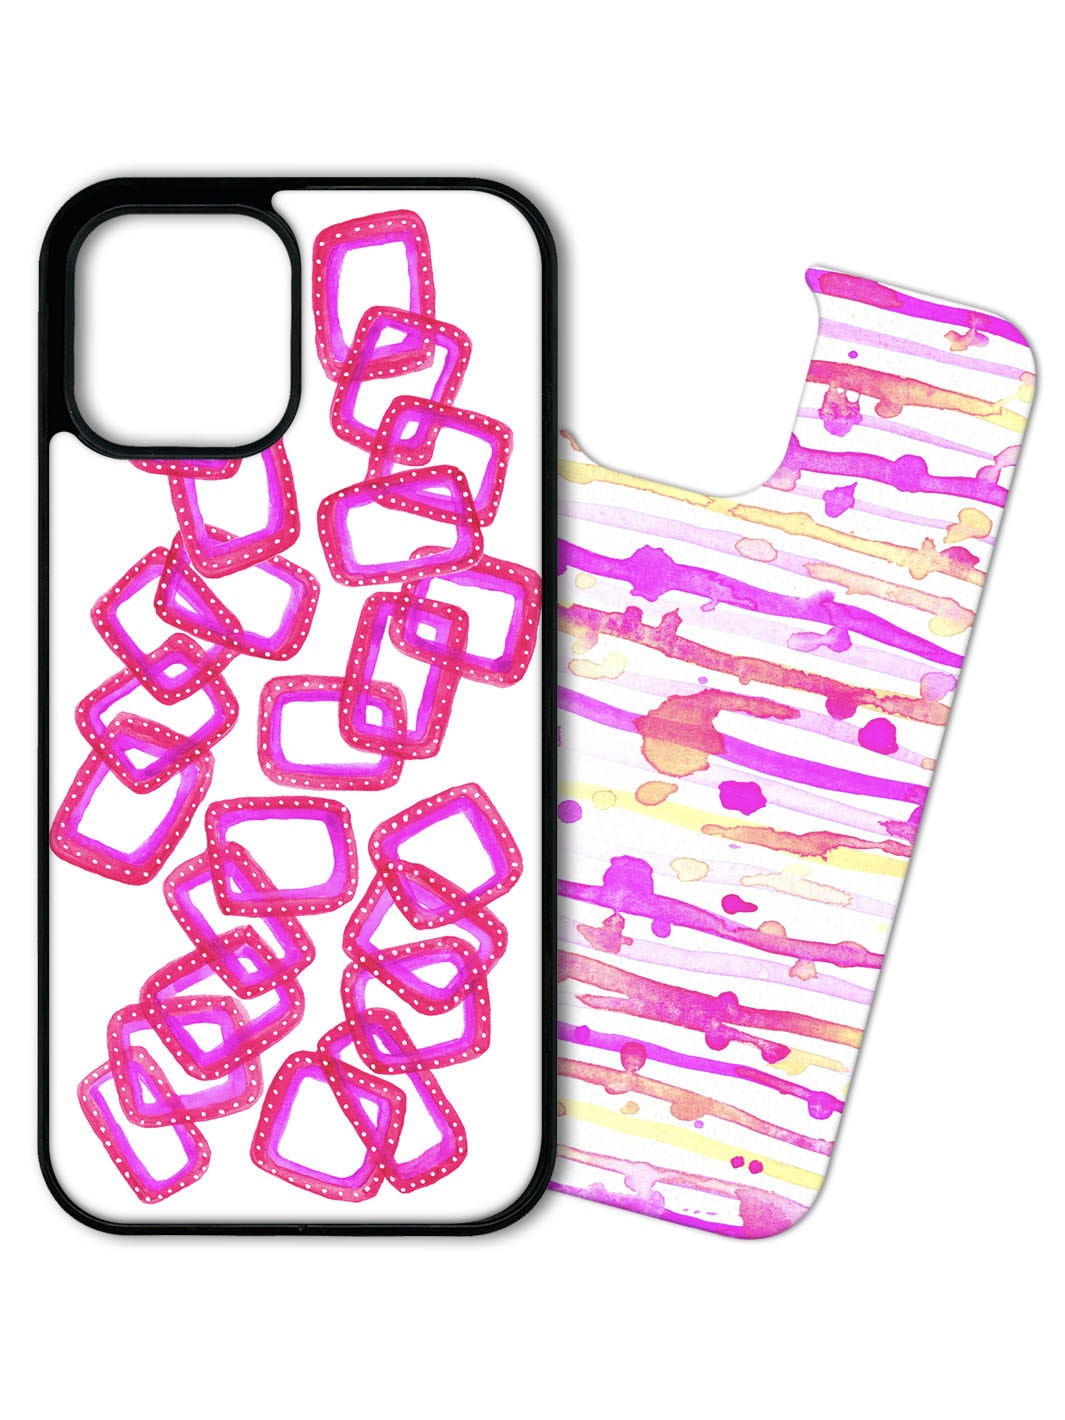 Phone Case Set - Love Pink